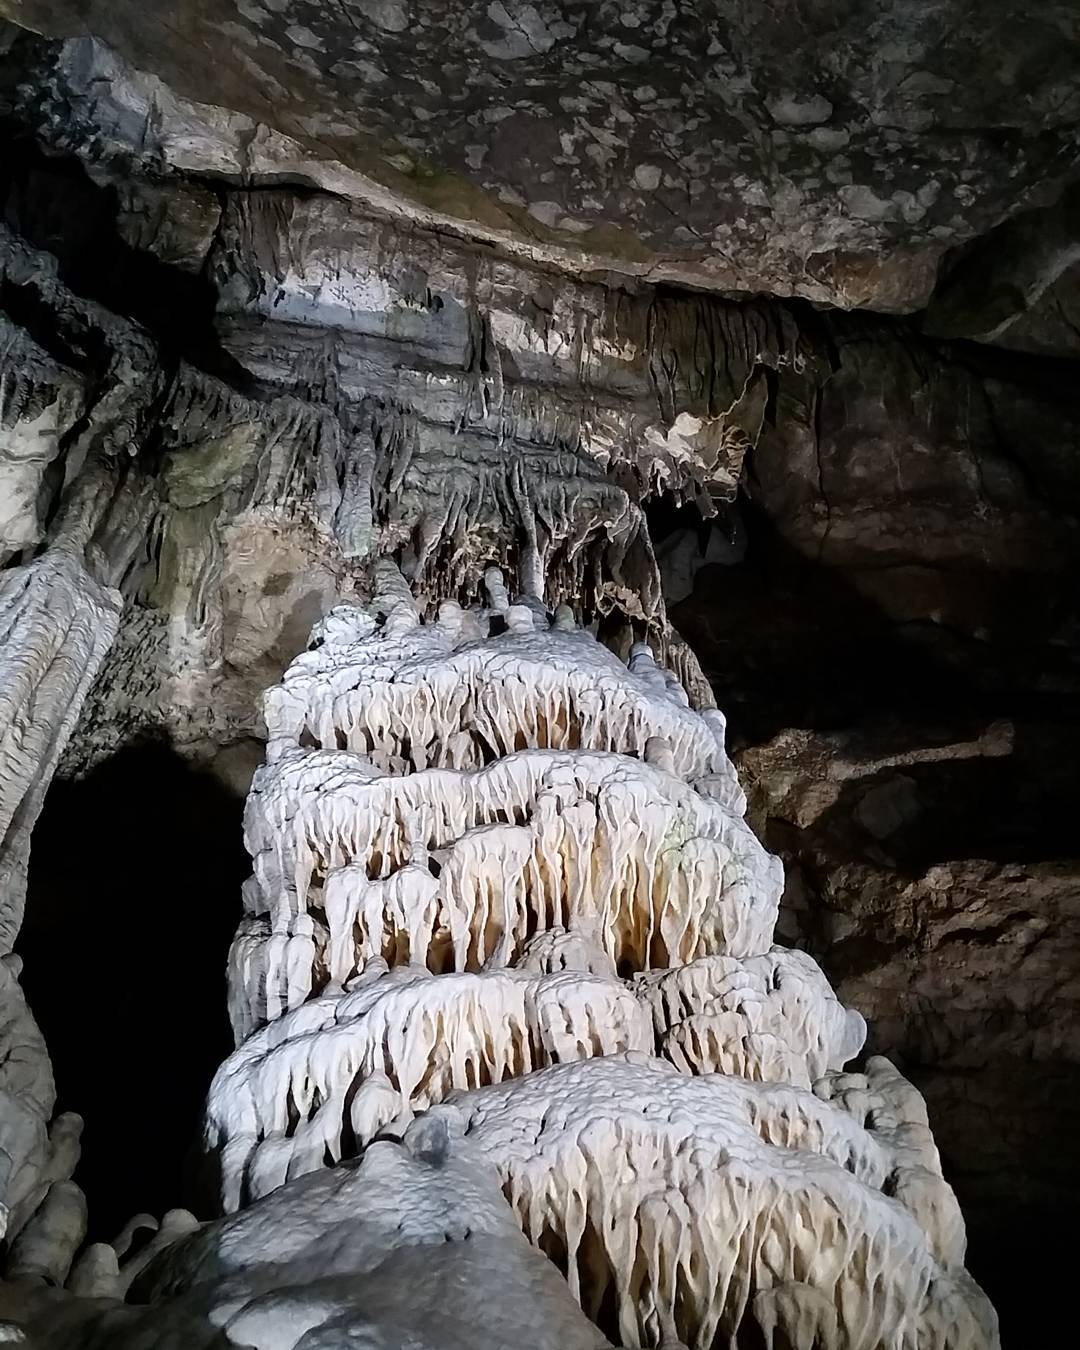 A limestone formation looking like a huge cake